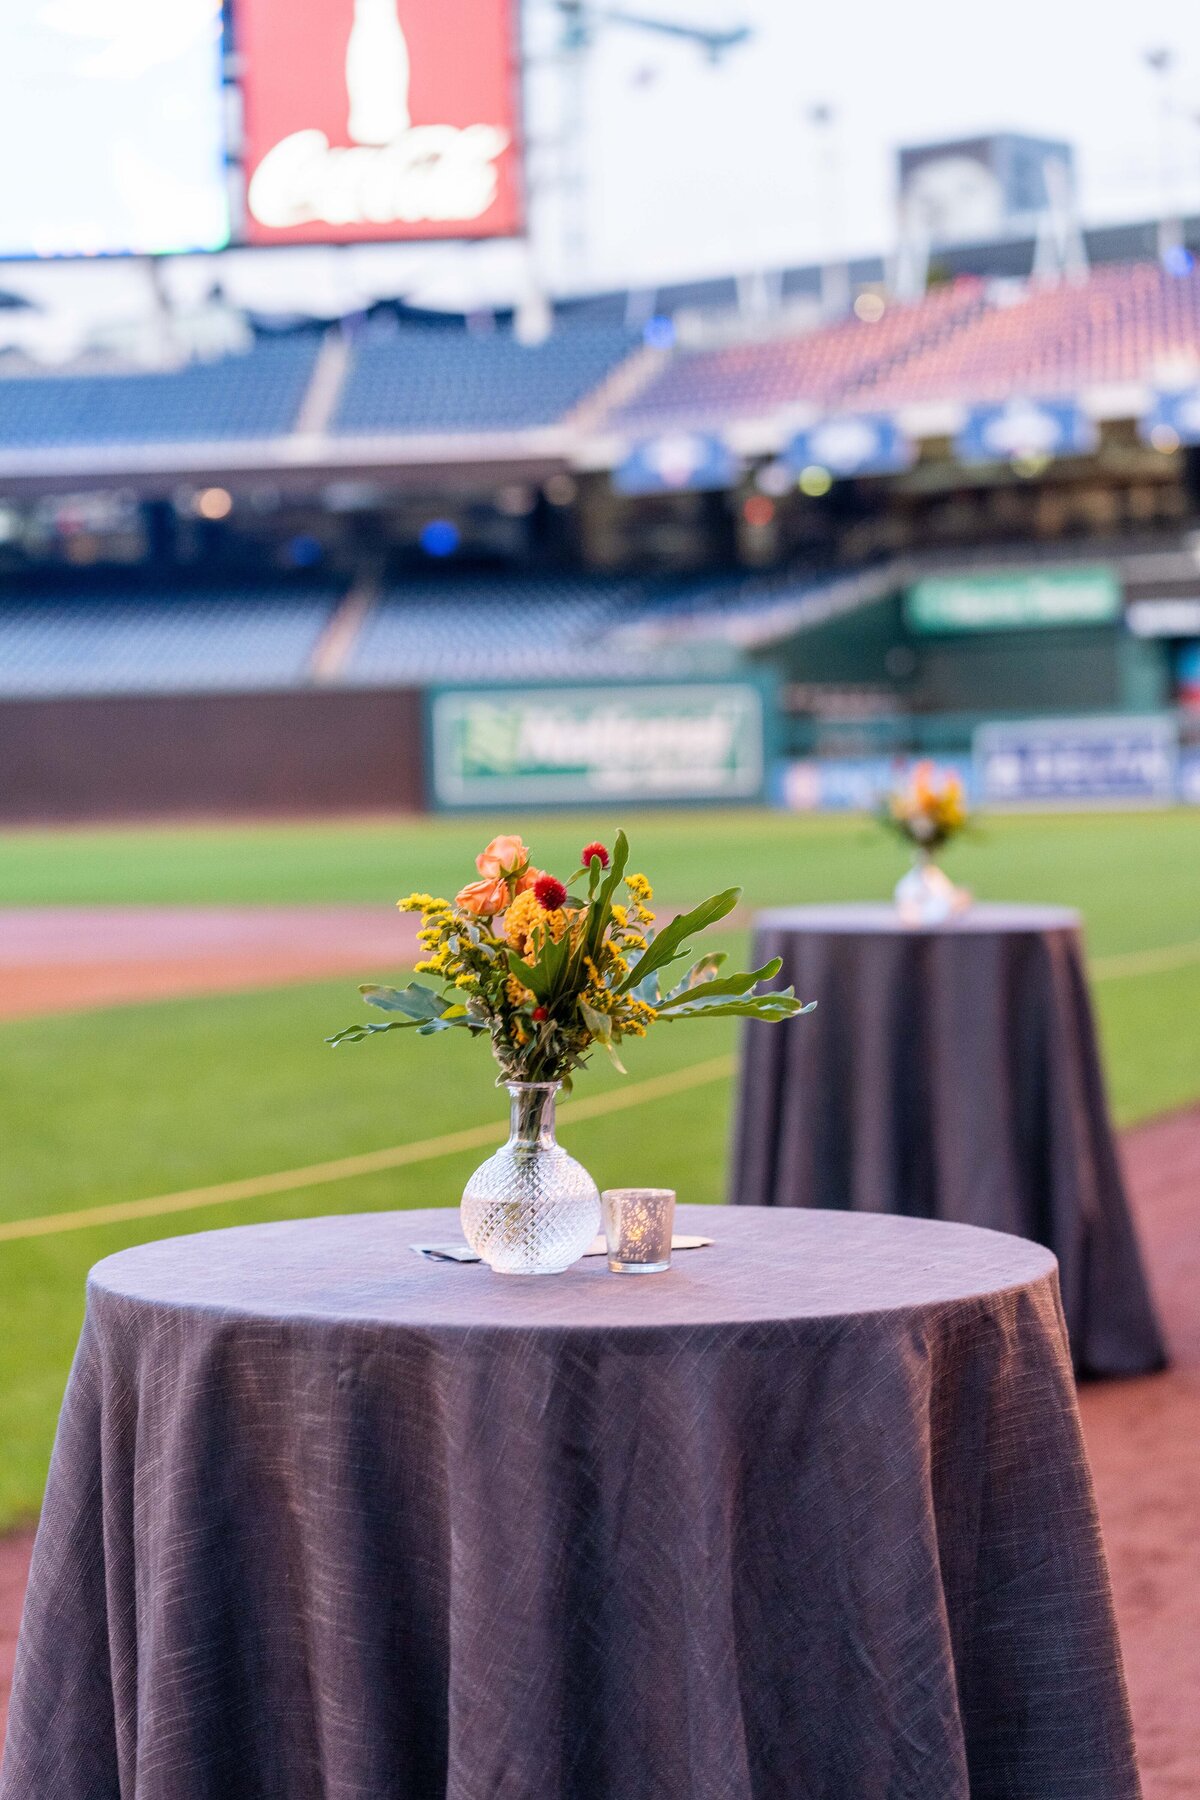 Table arrangements at a gala on a baseball field